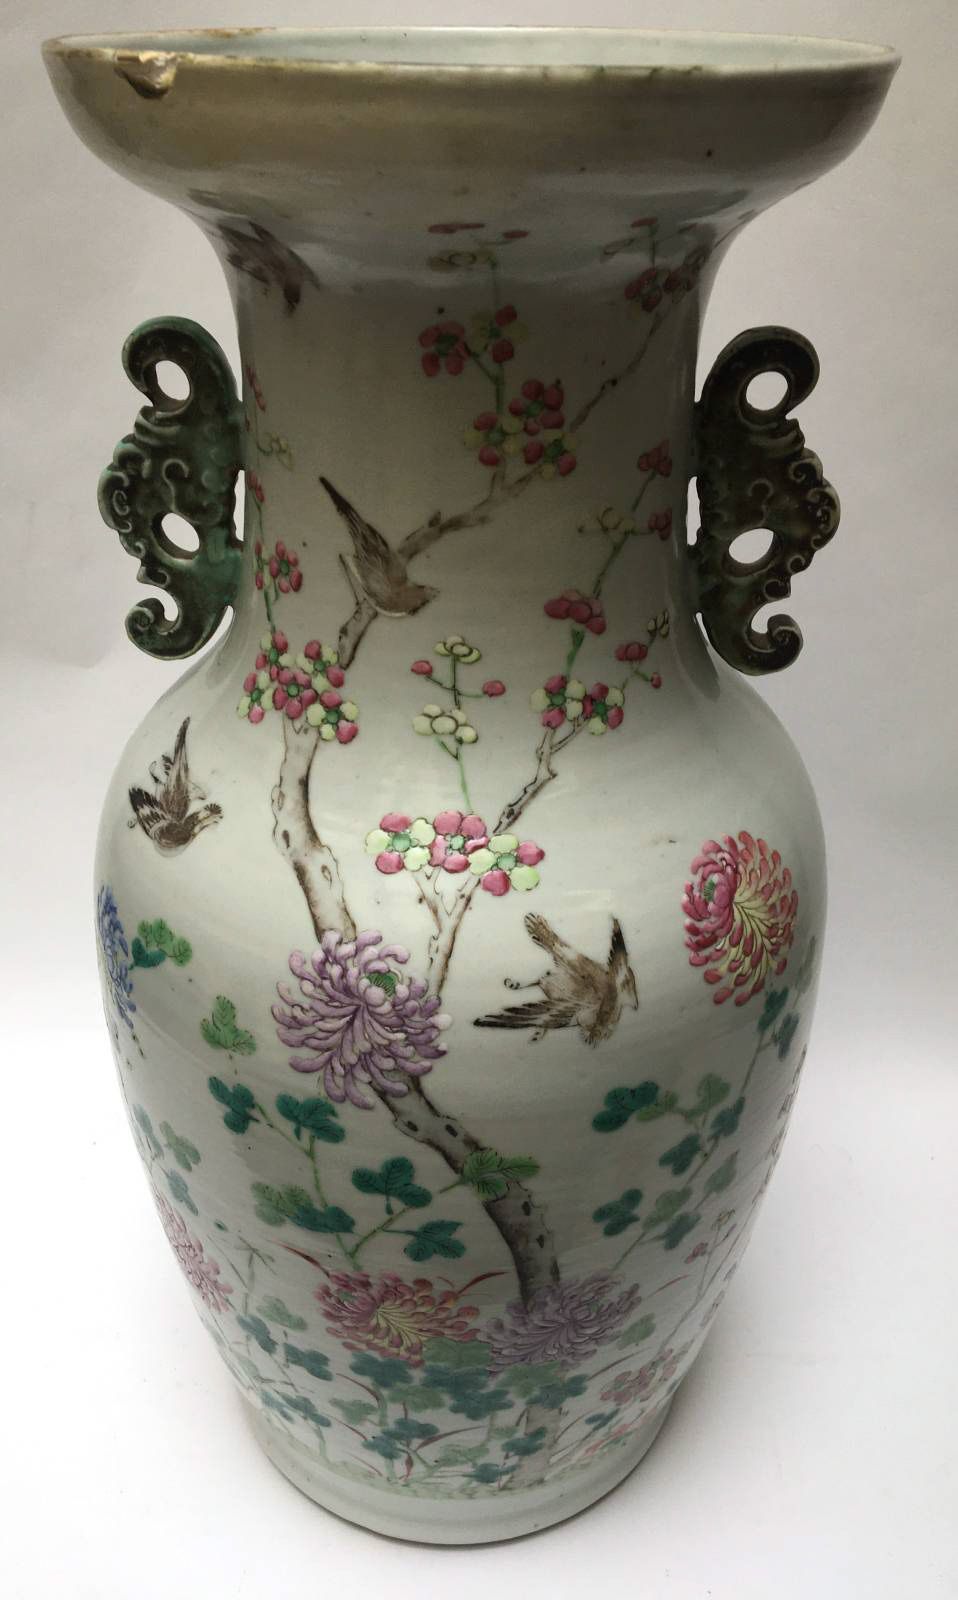 Null 饰有牡丹、蝴蝶和菊花的多色瓷质柱形花瓶。

中国，20世纪初

高：44厘米 

(脖子上的芯片)